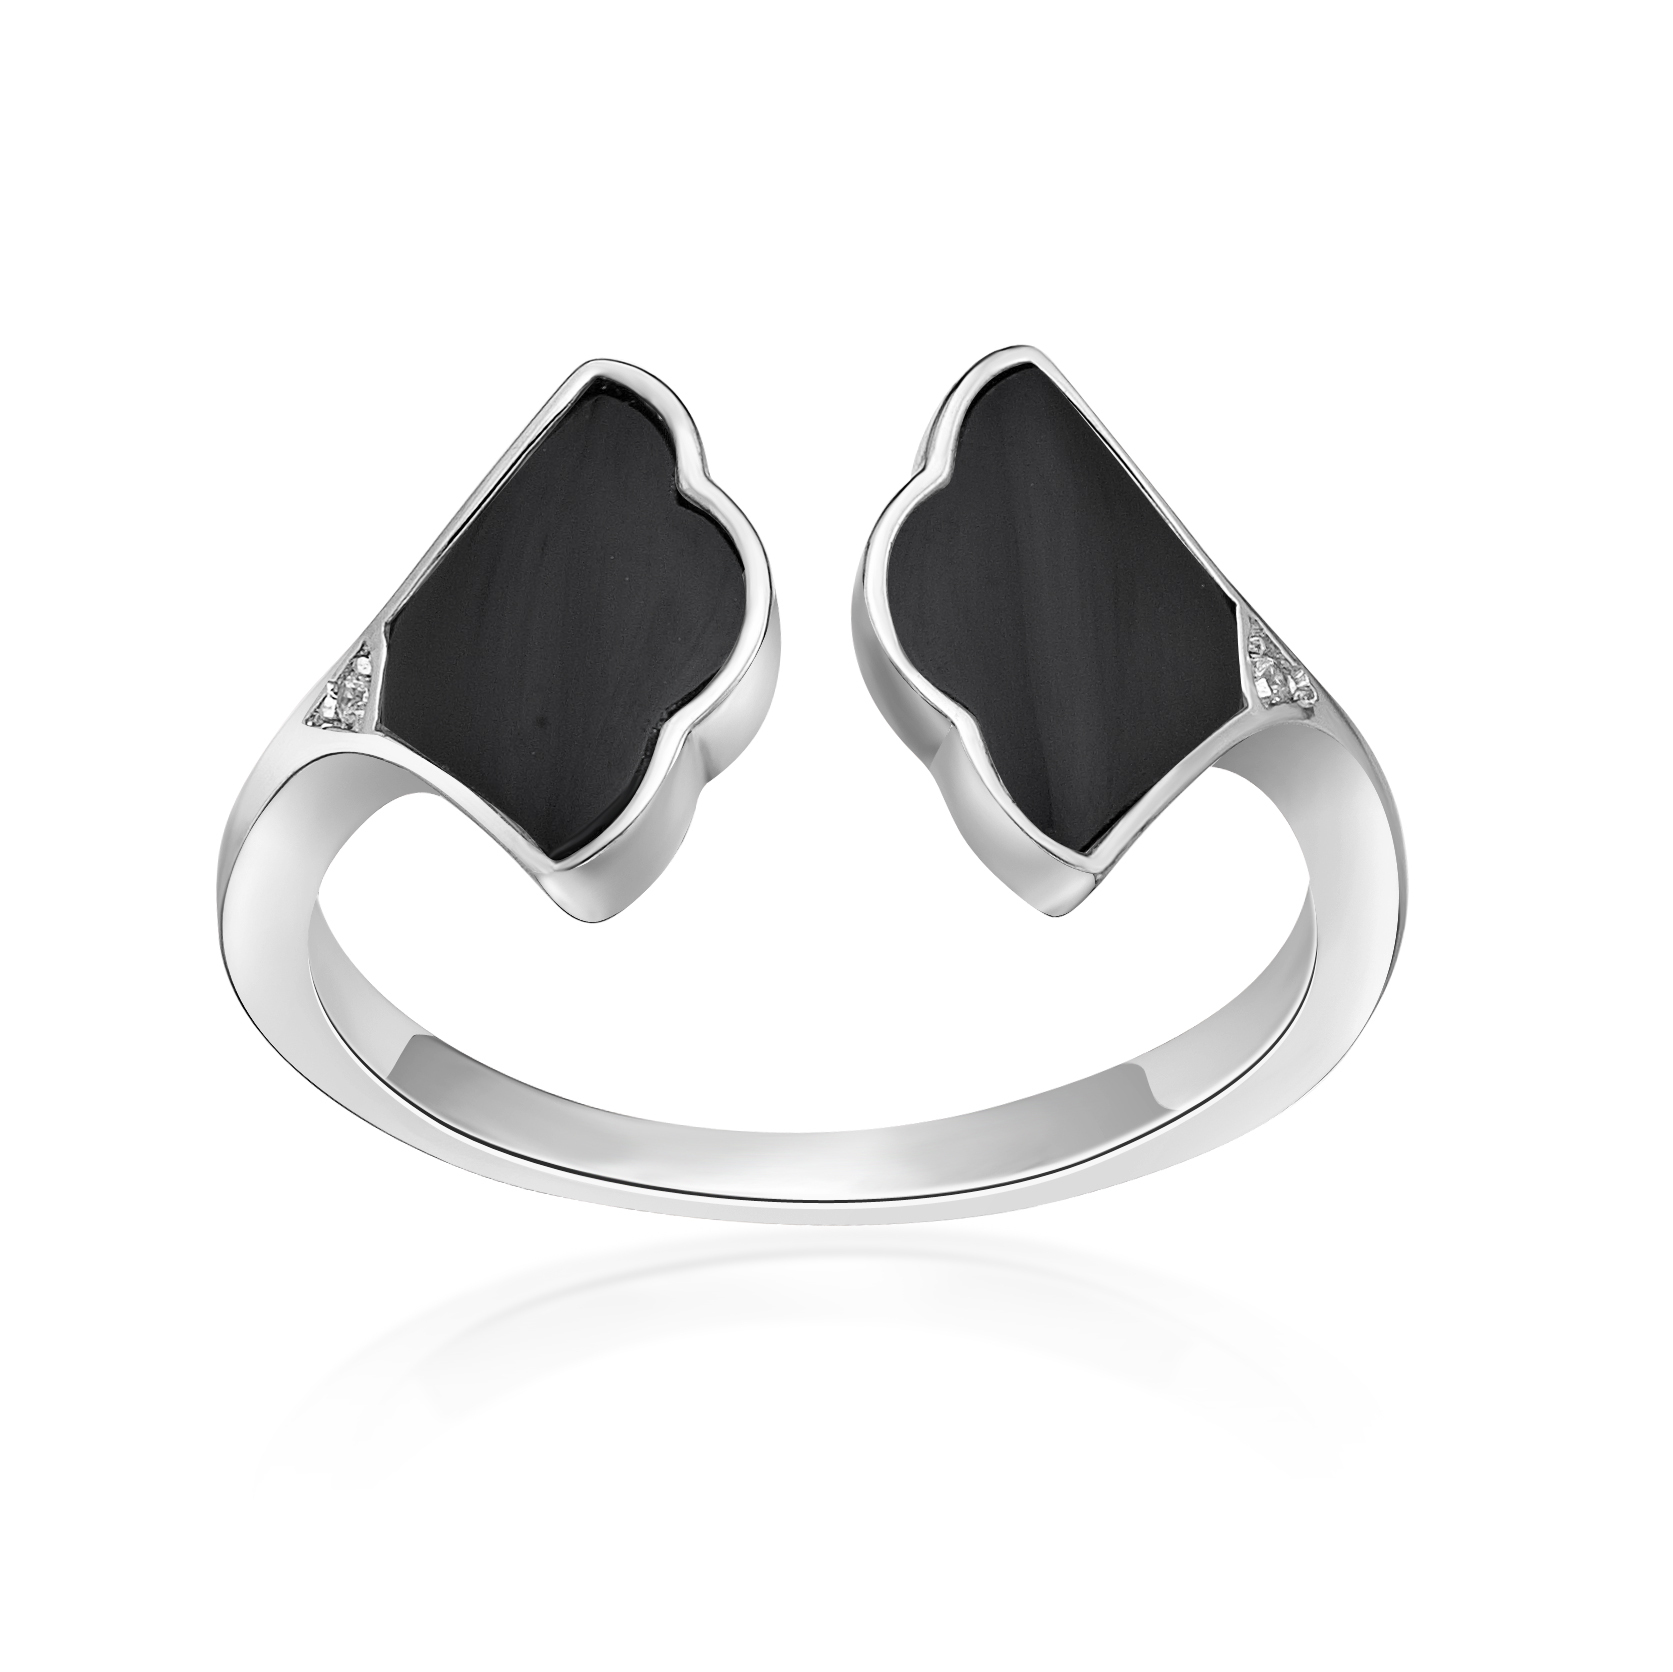 48849-ring-fashion-jewelry-sterling-silver-black-onyx-48849-2.jpg